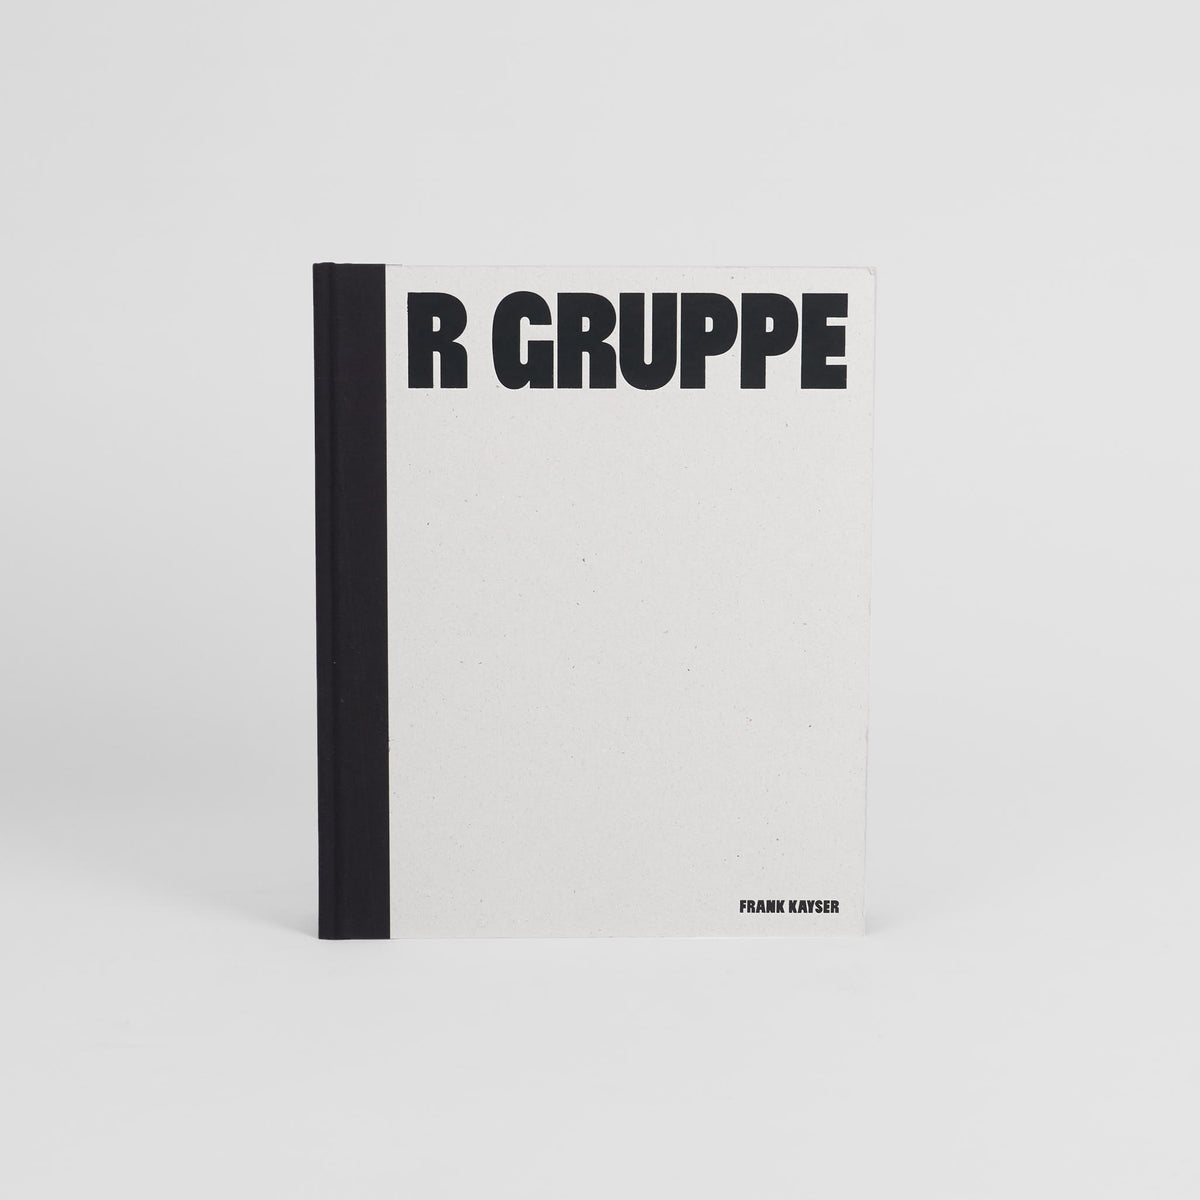 R Gruppe – The Book About America&#39;s Cult Porsche Car Club, Frank Kayser